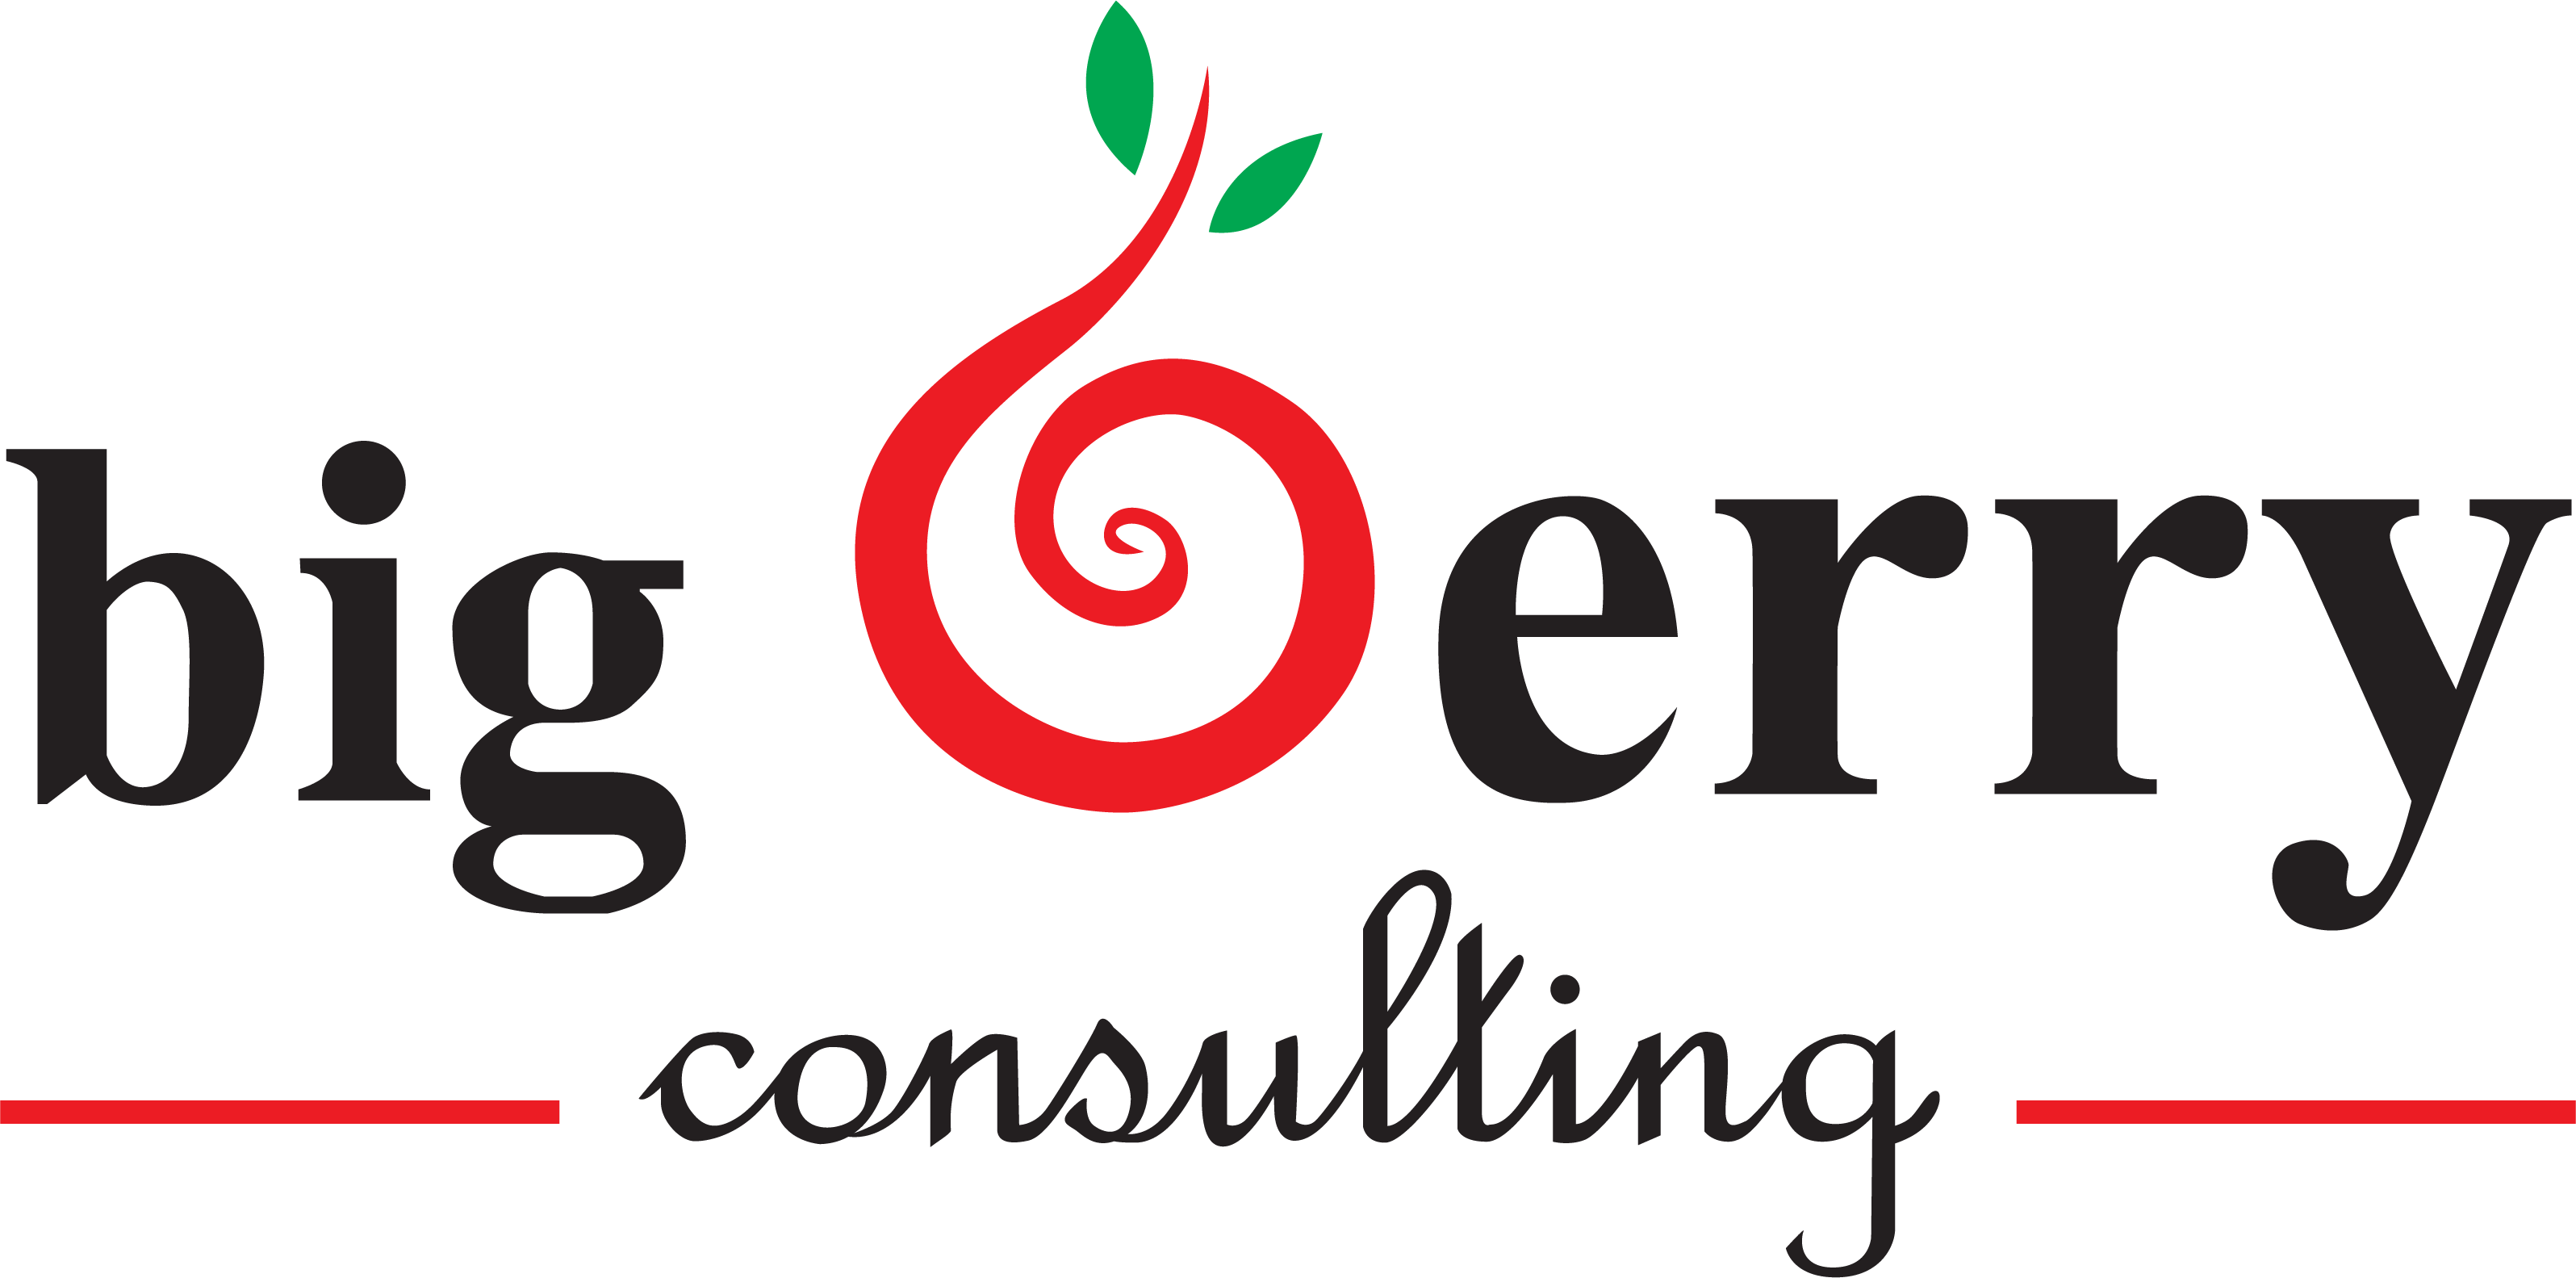 Big Berry Consulting (BBC) Logo